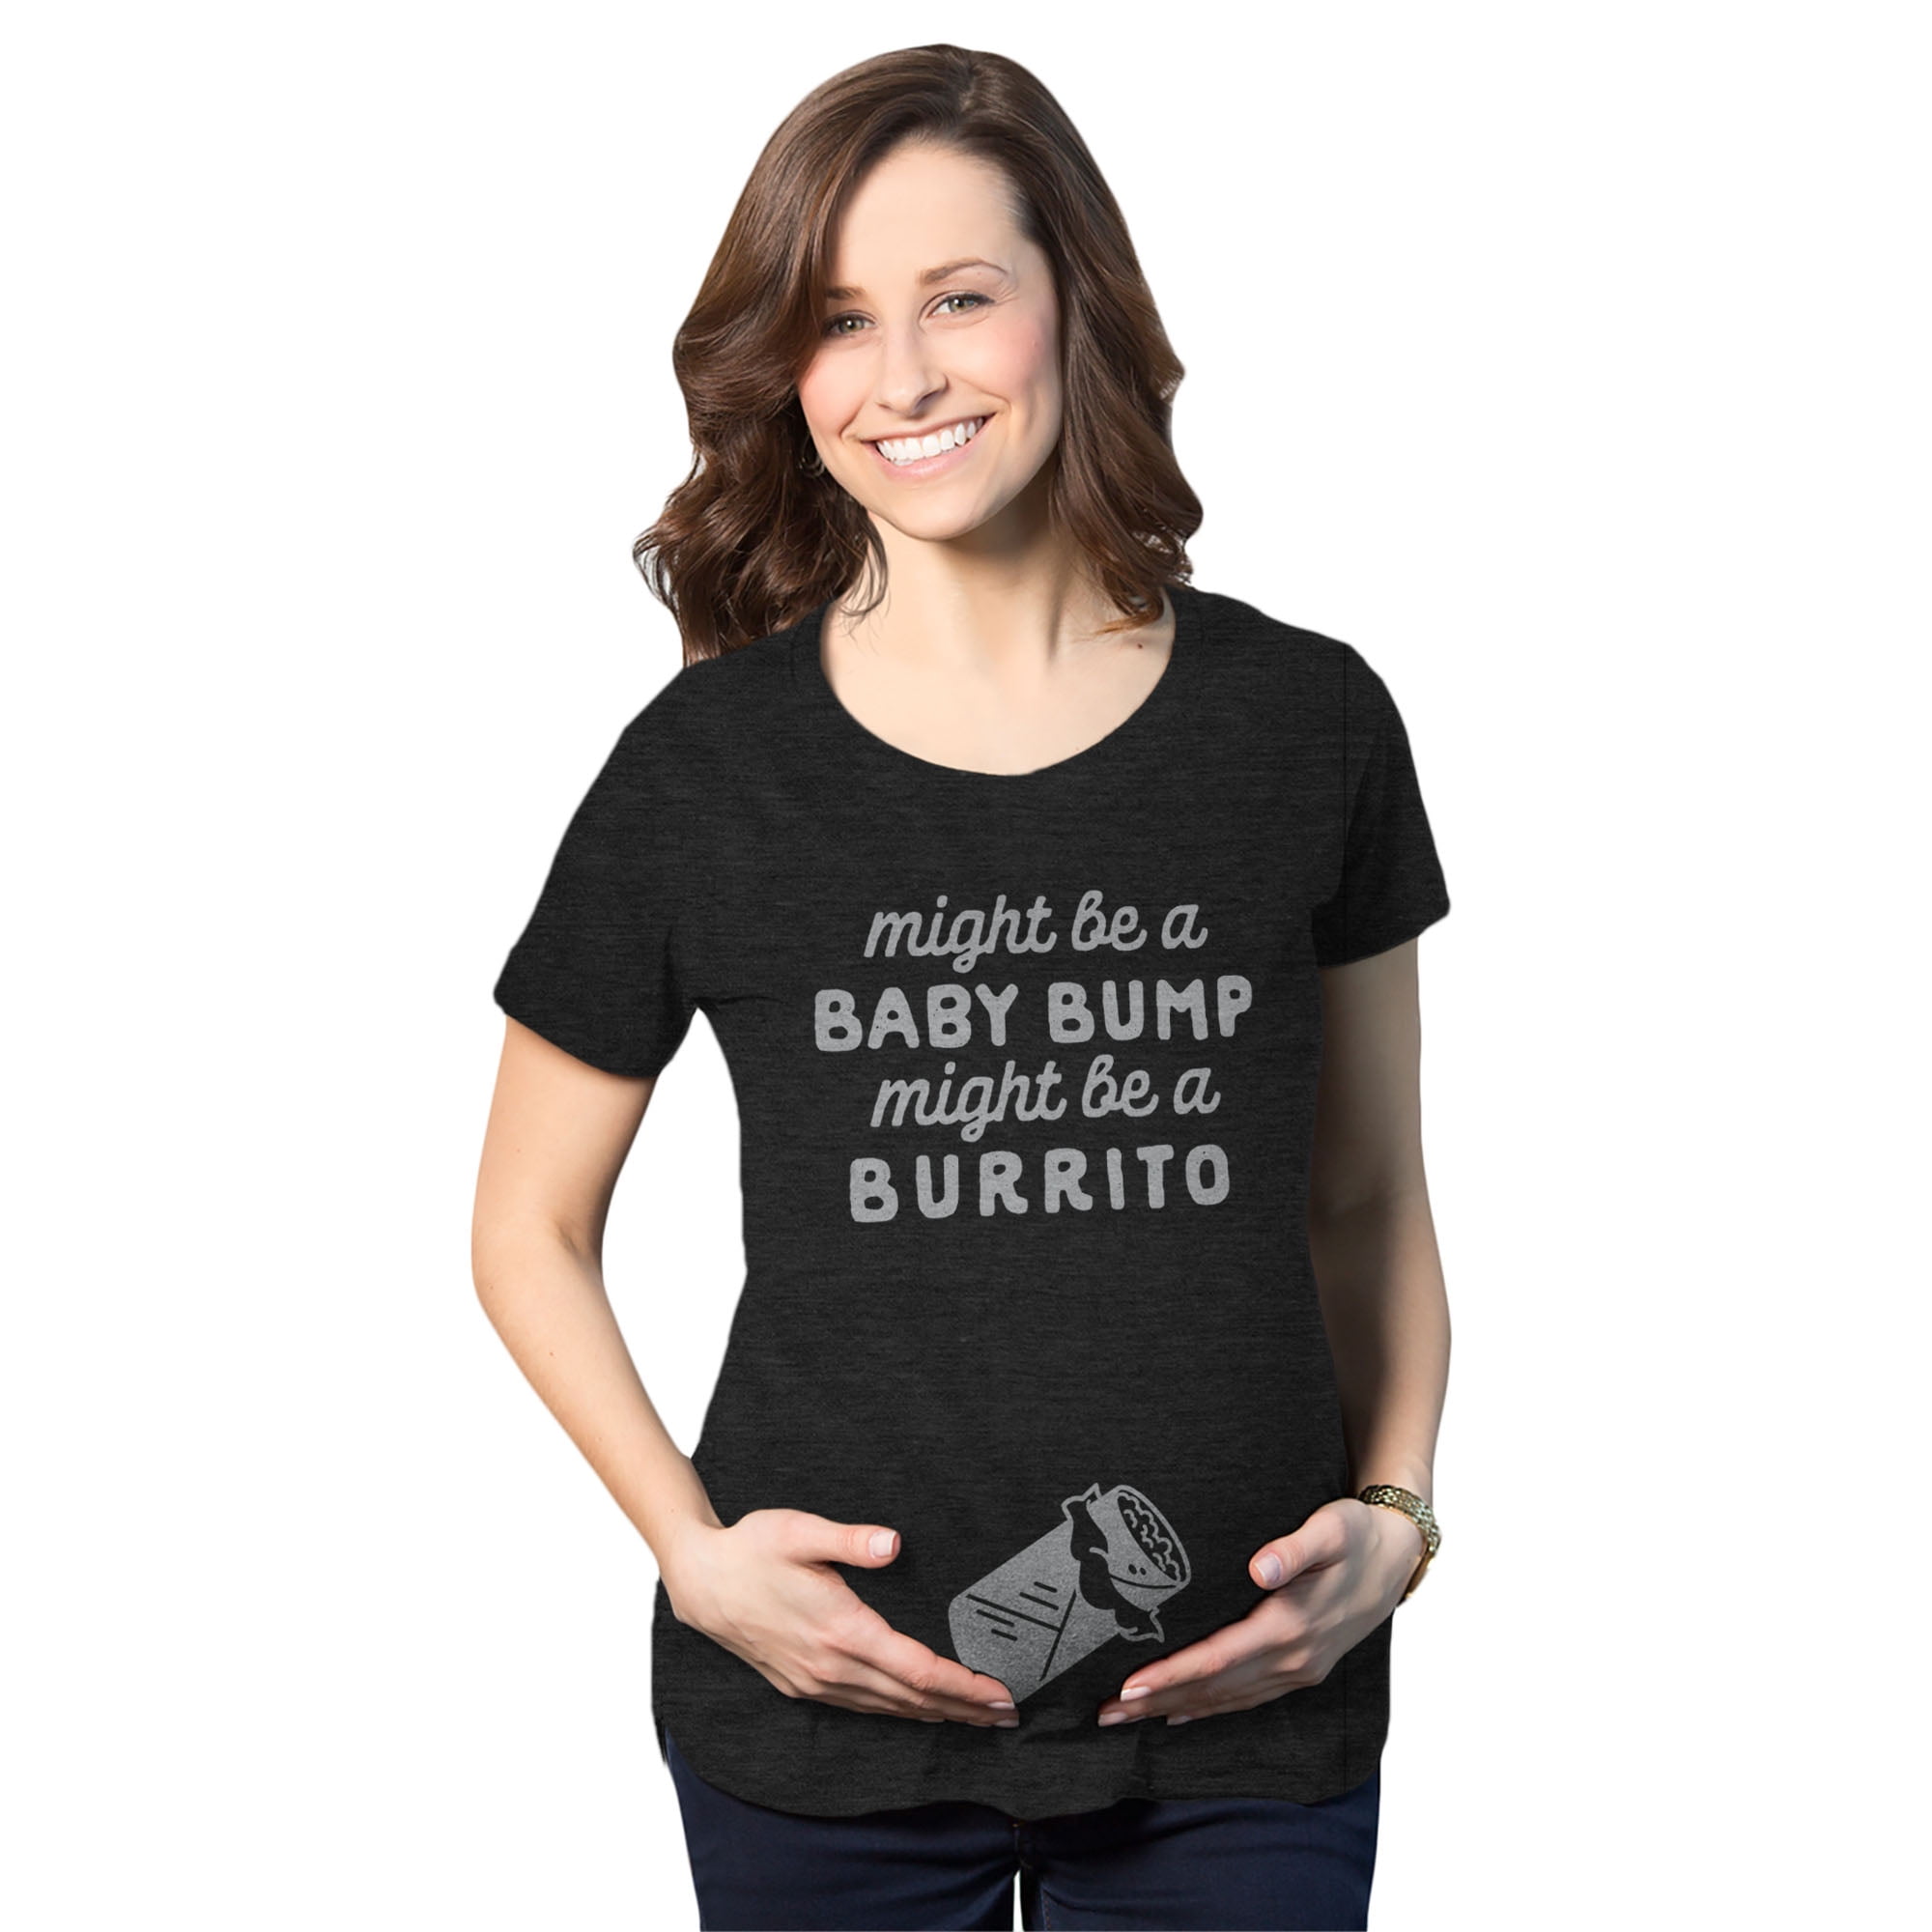 Professional Baby Burrito Maker Shirt Adult M